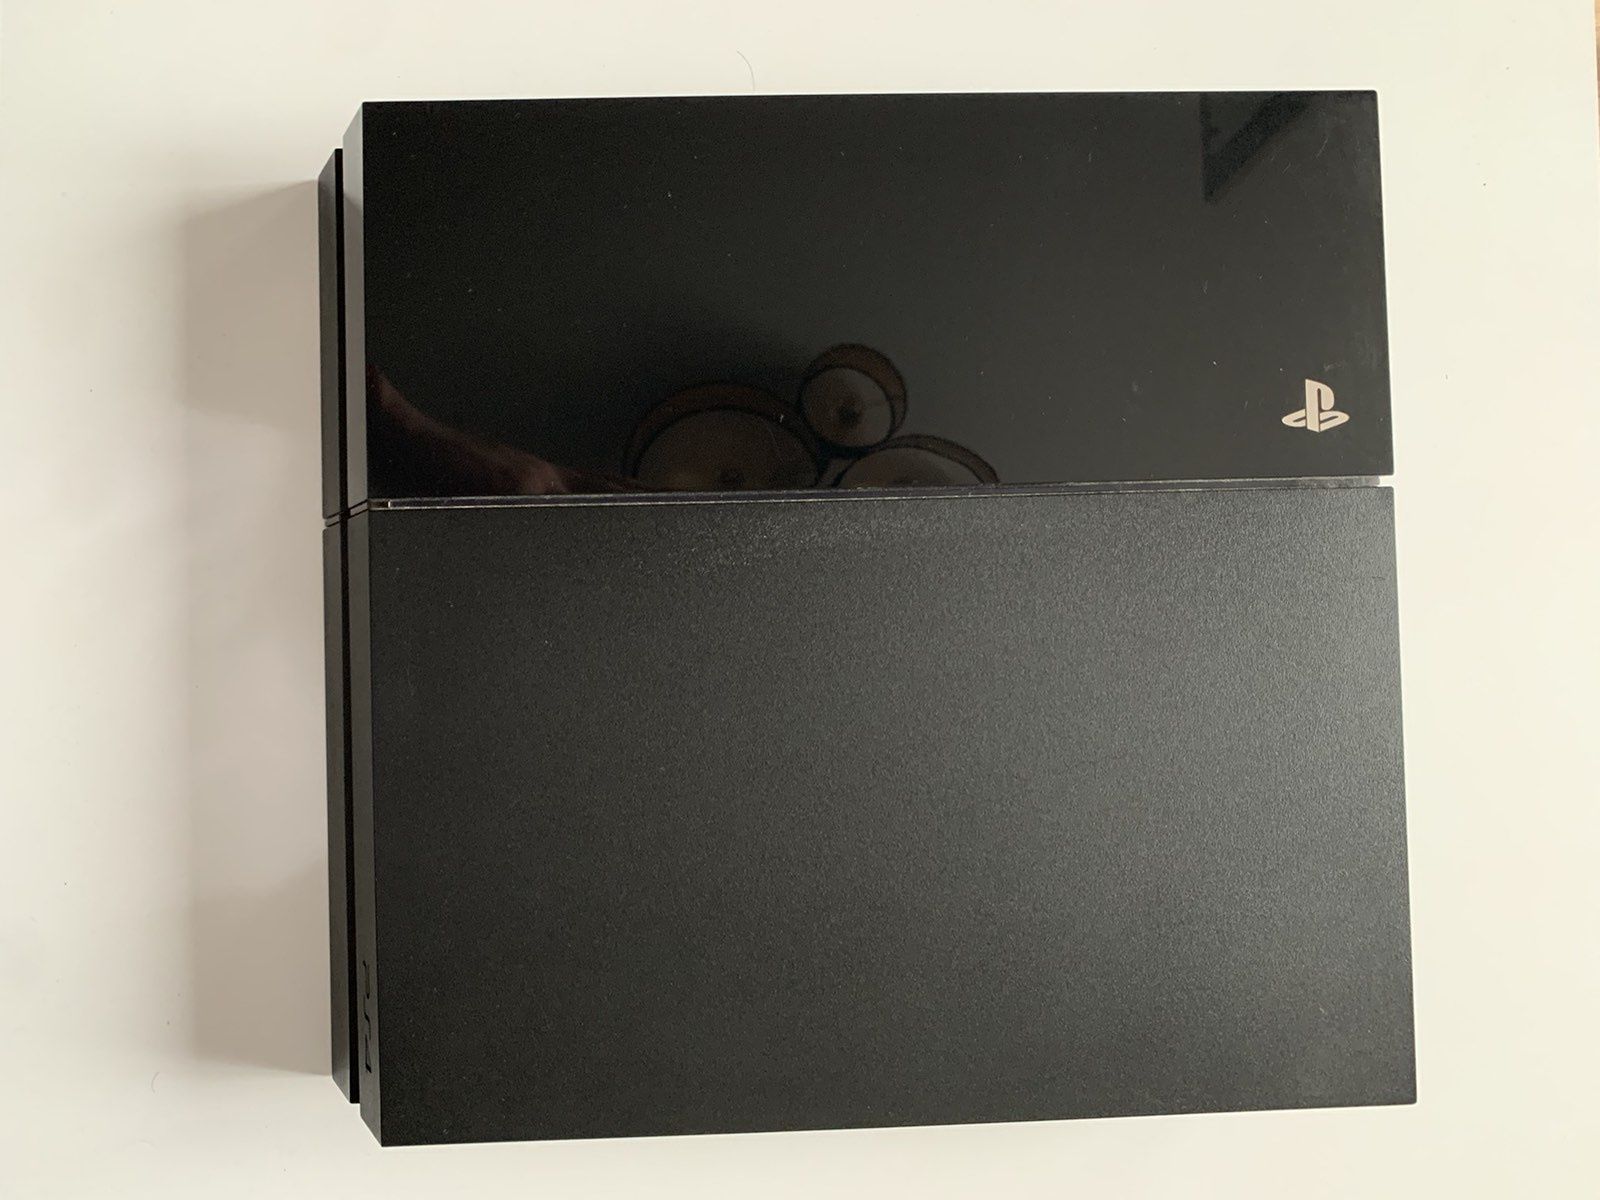 Playstation 4-PS4 Standard Edition 500GB